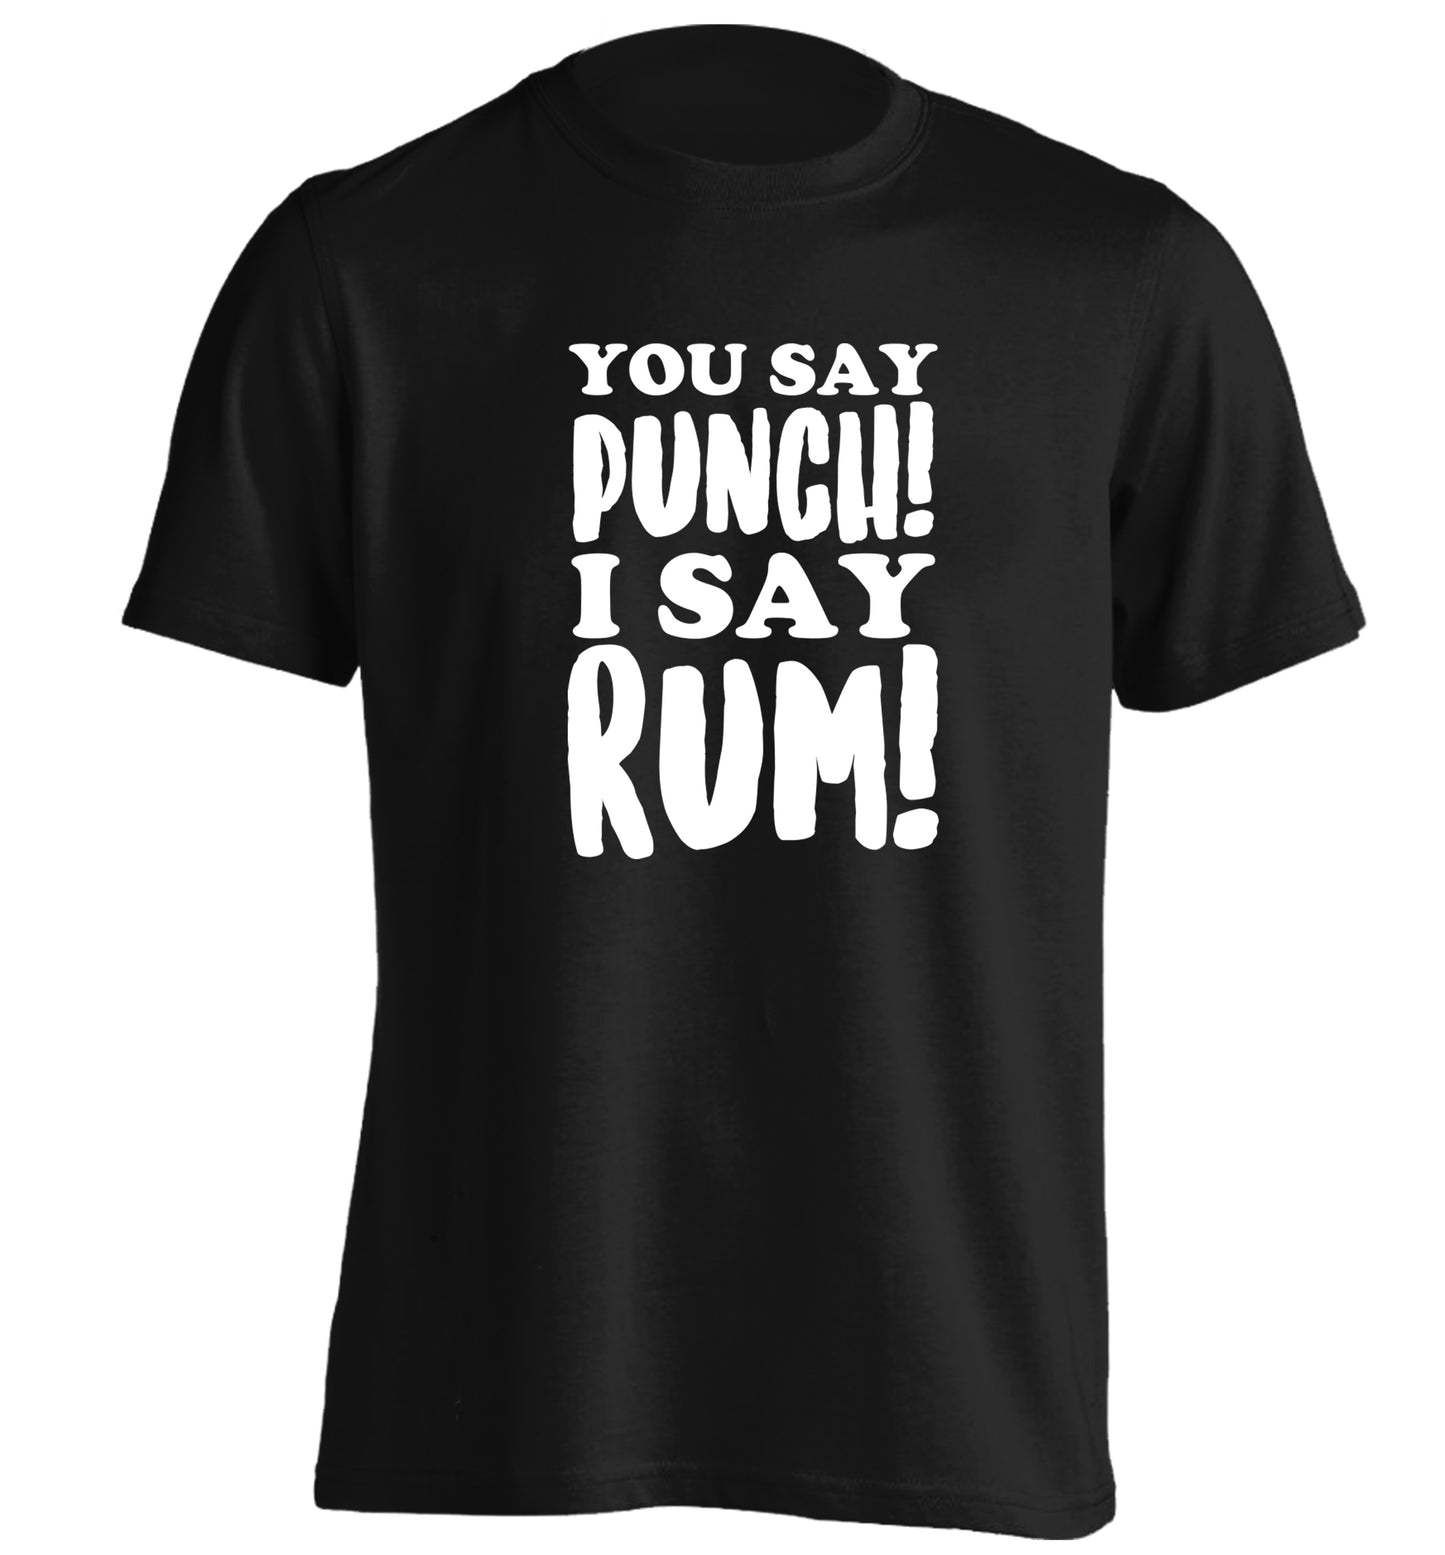 You say punch I say rum! adults unisex black Tshirt 2XL